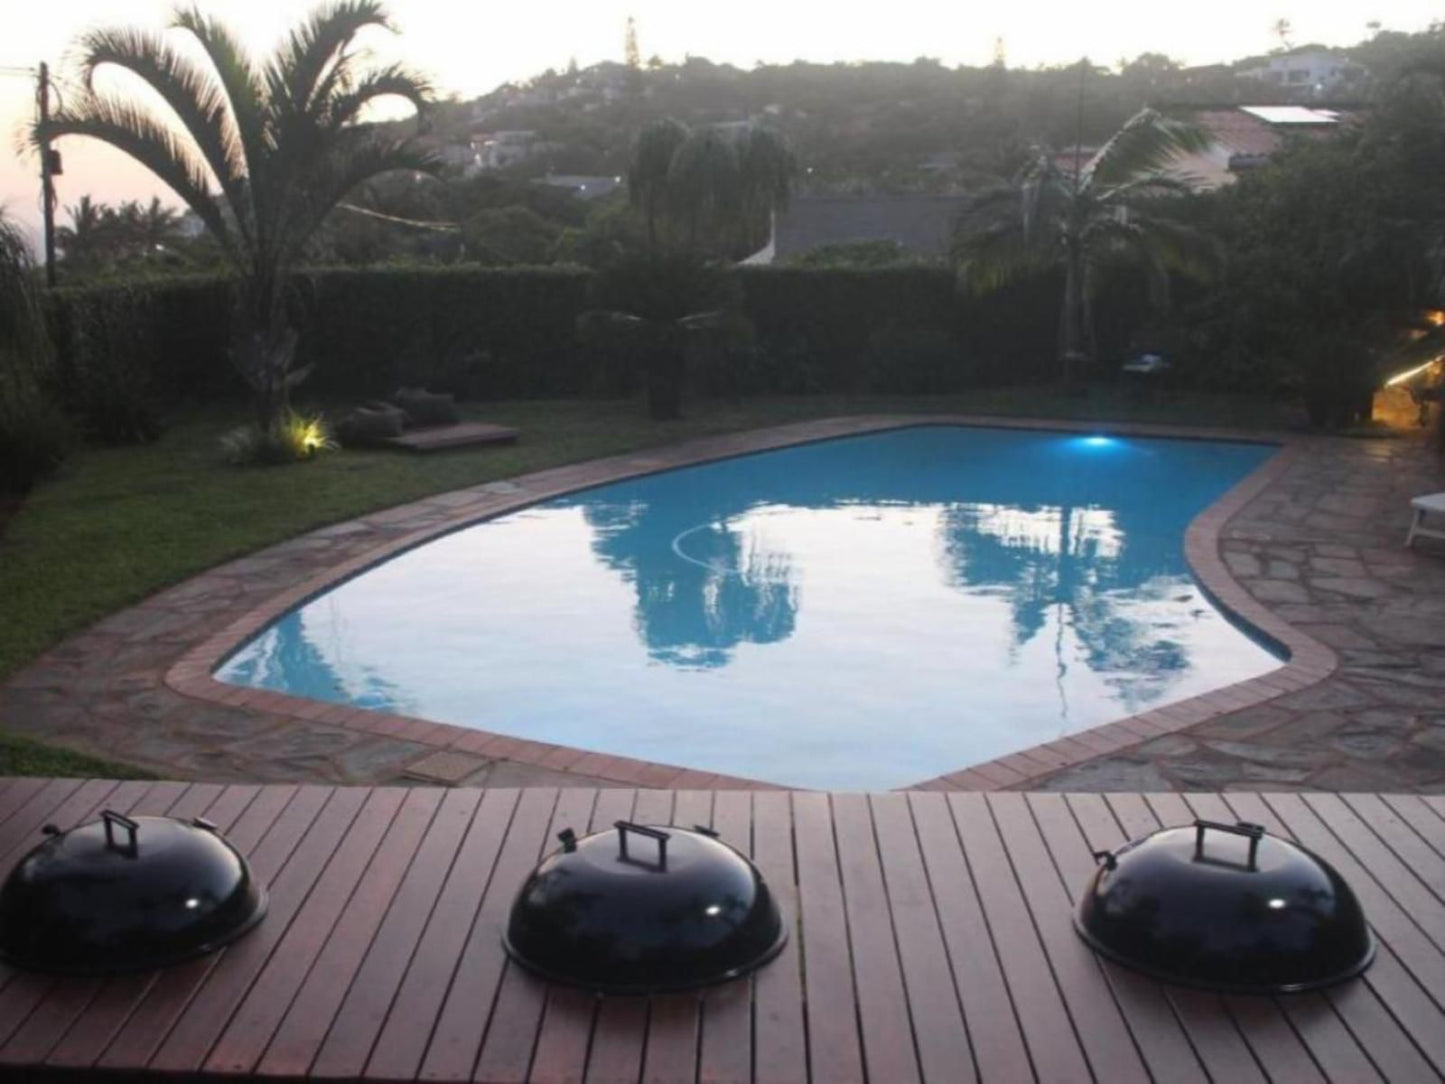 Jakita S Guest House Ballito Kwazulu Natal South Africa Swimming Pool